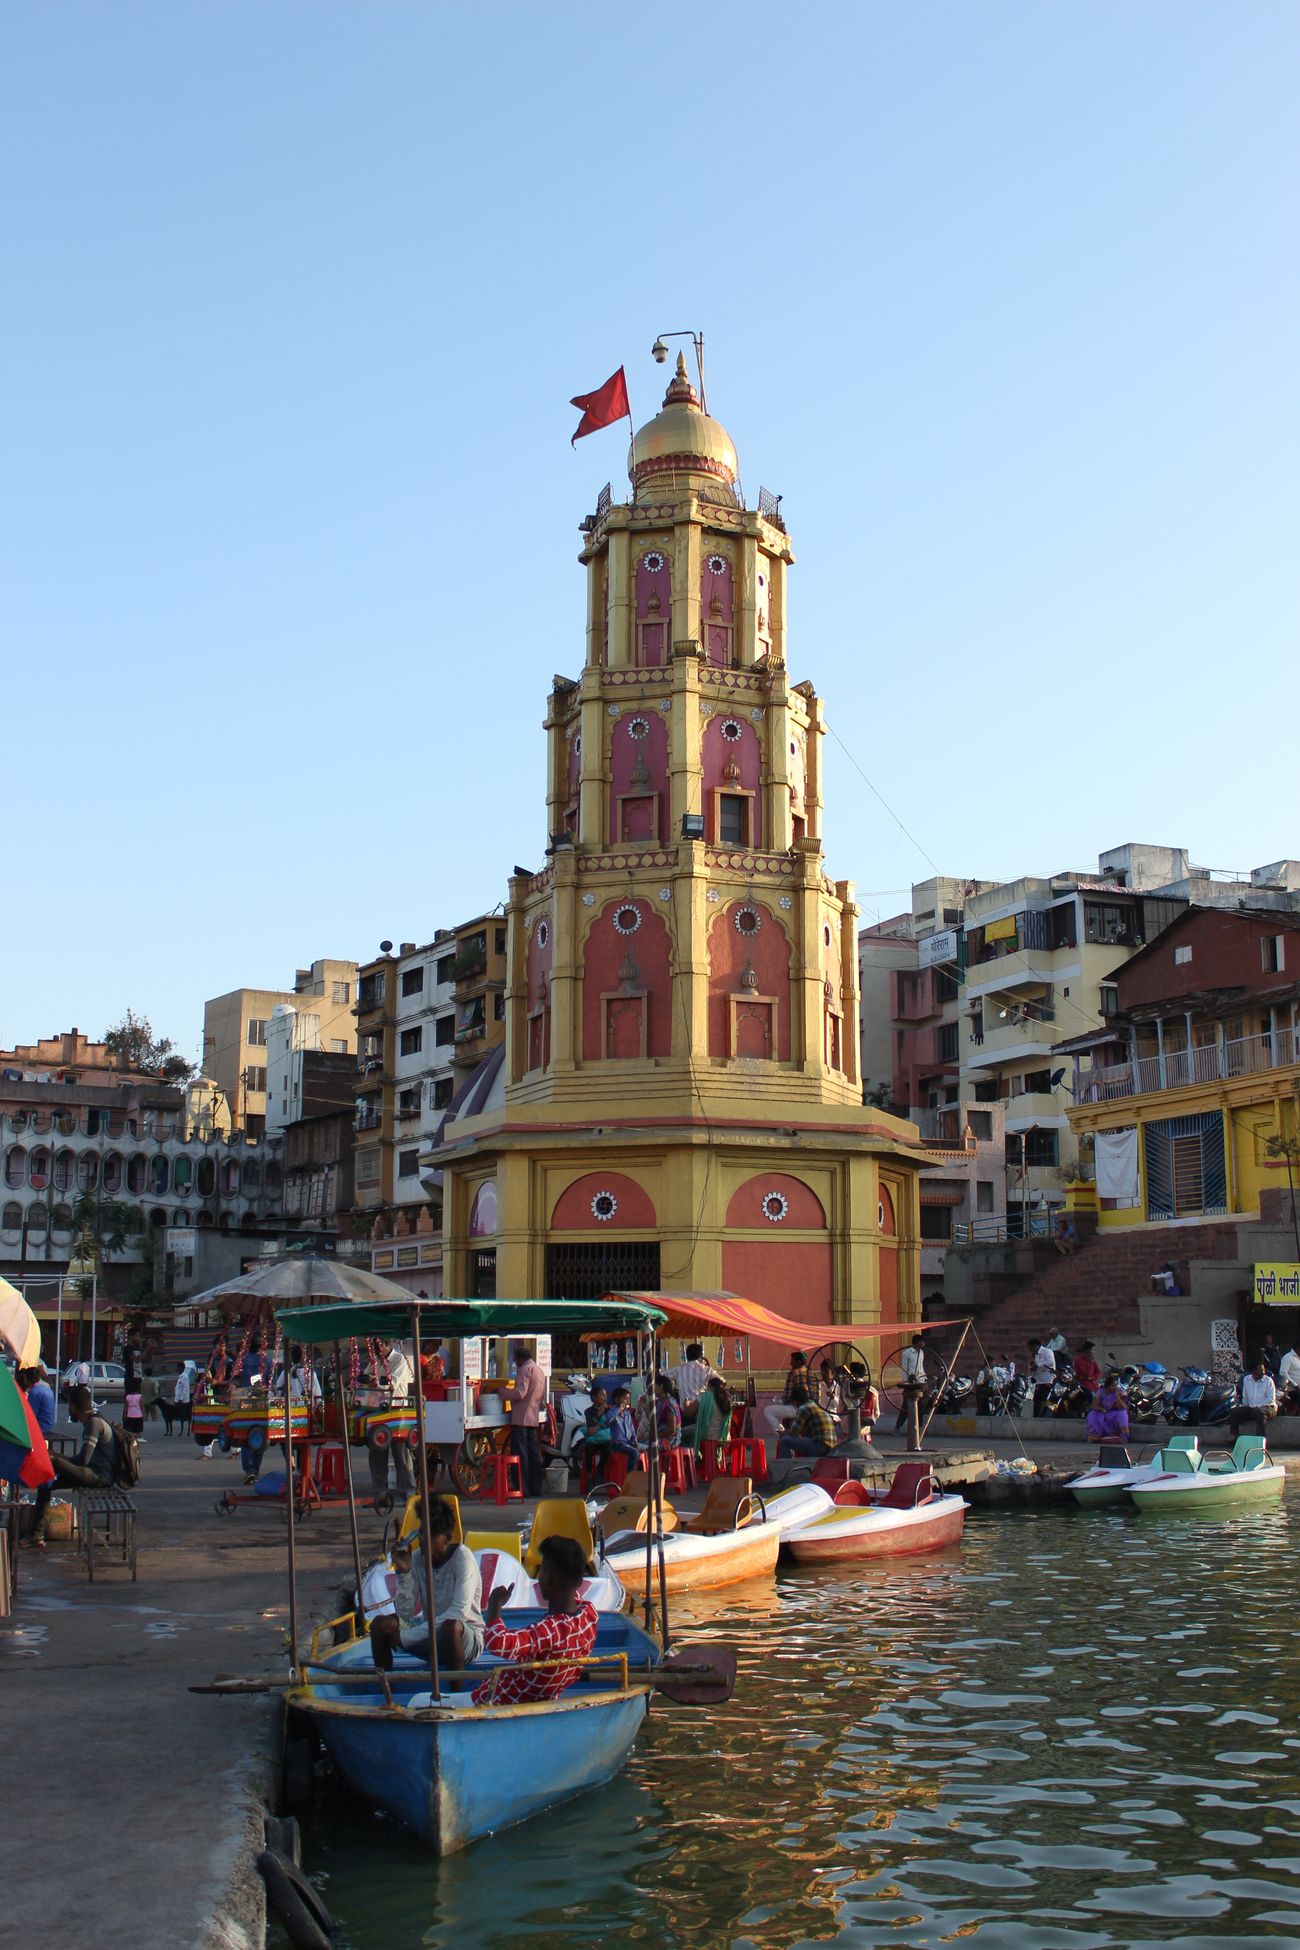 People taking a boat trip at the beautiful red and yellow Yashwantrao Maharaj Sadhu Dev Mamledar Temple